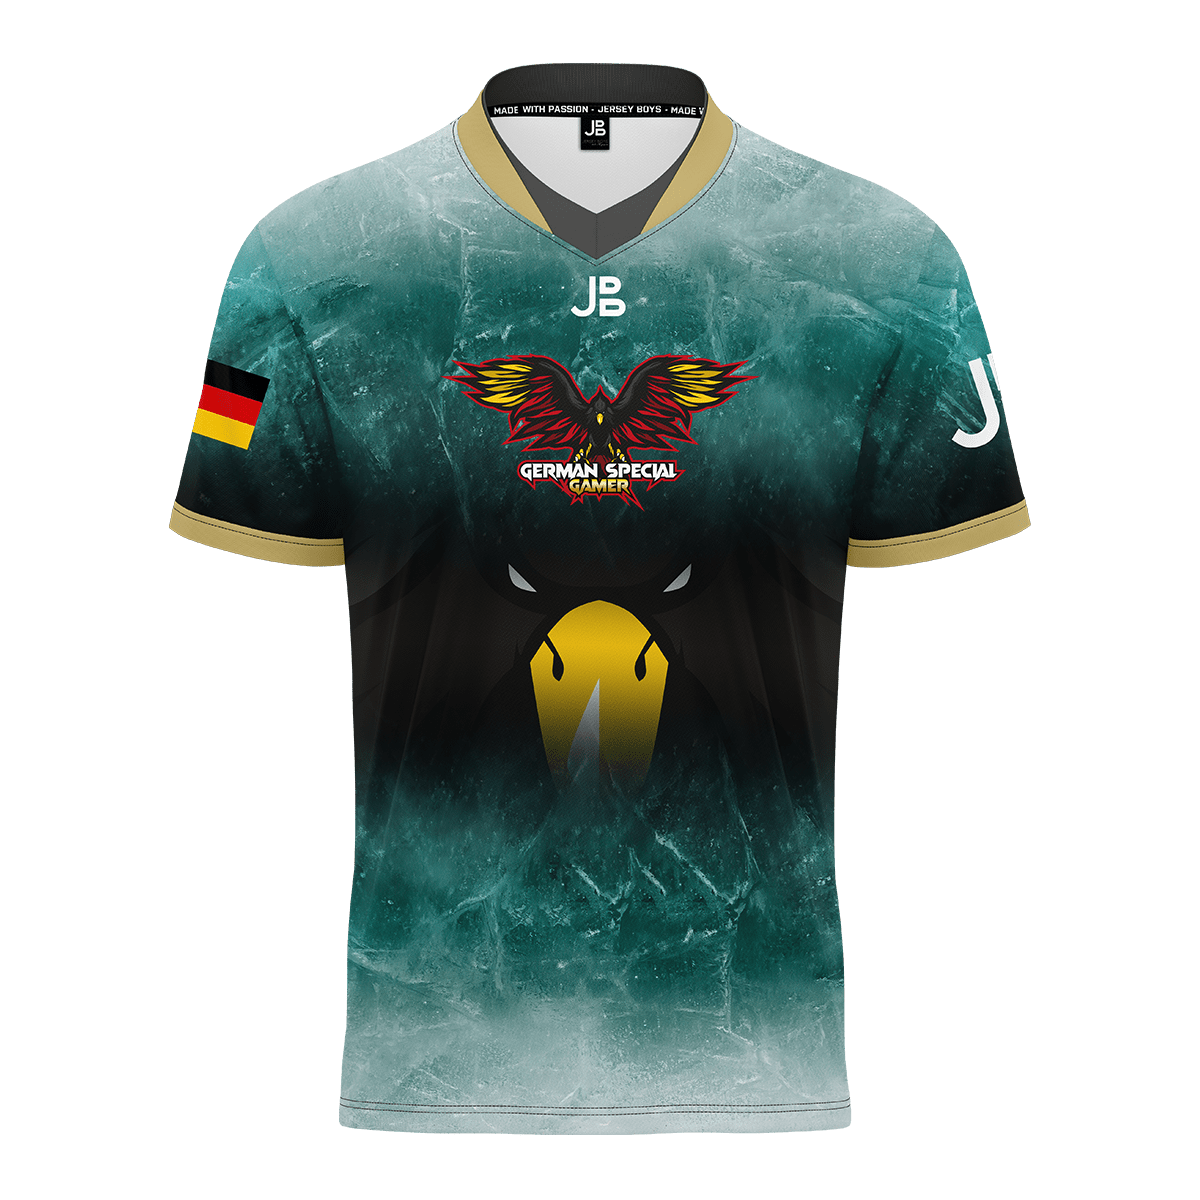 GERMAN SPECIAL GAMER - Jersey 2021